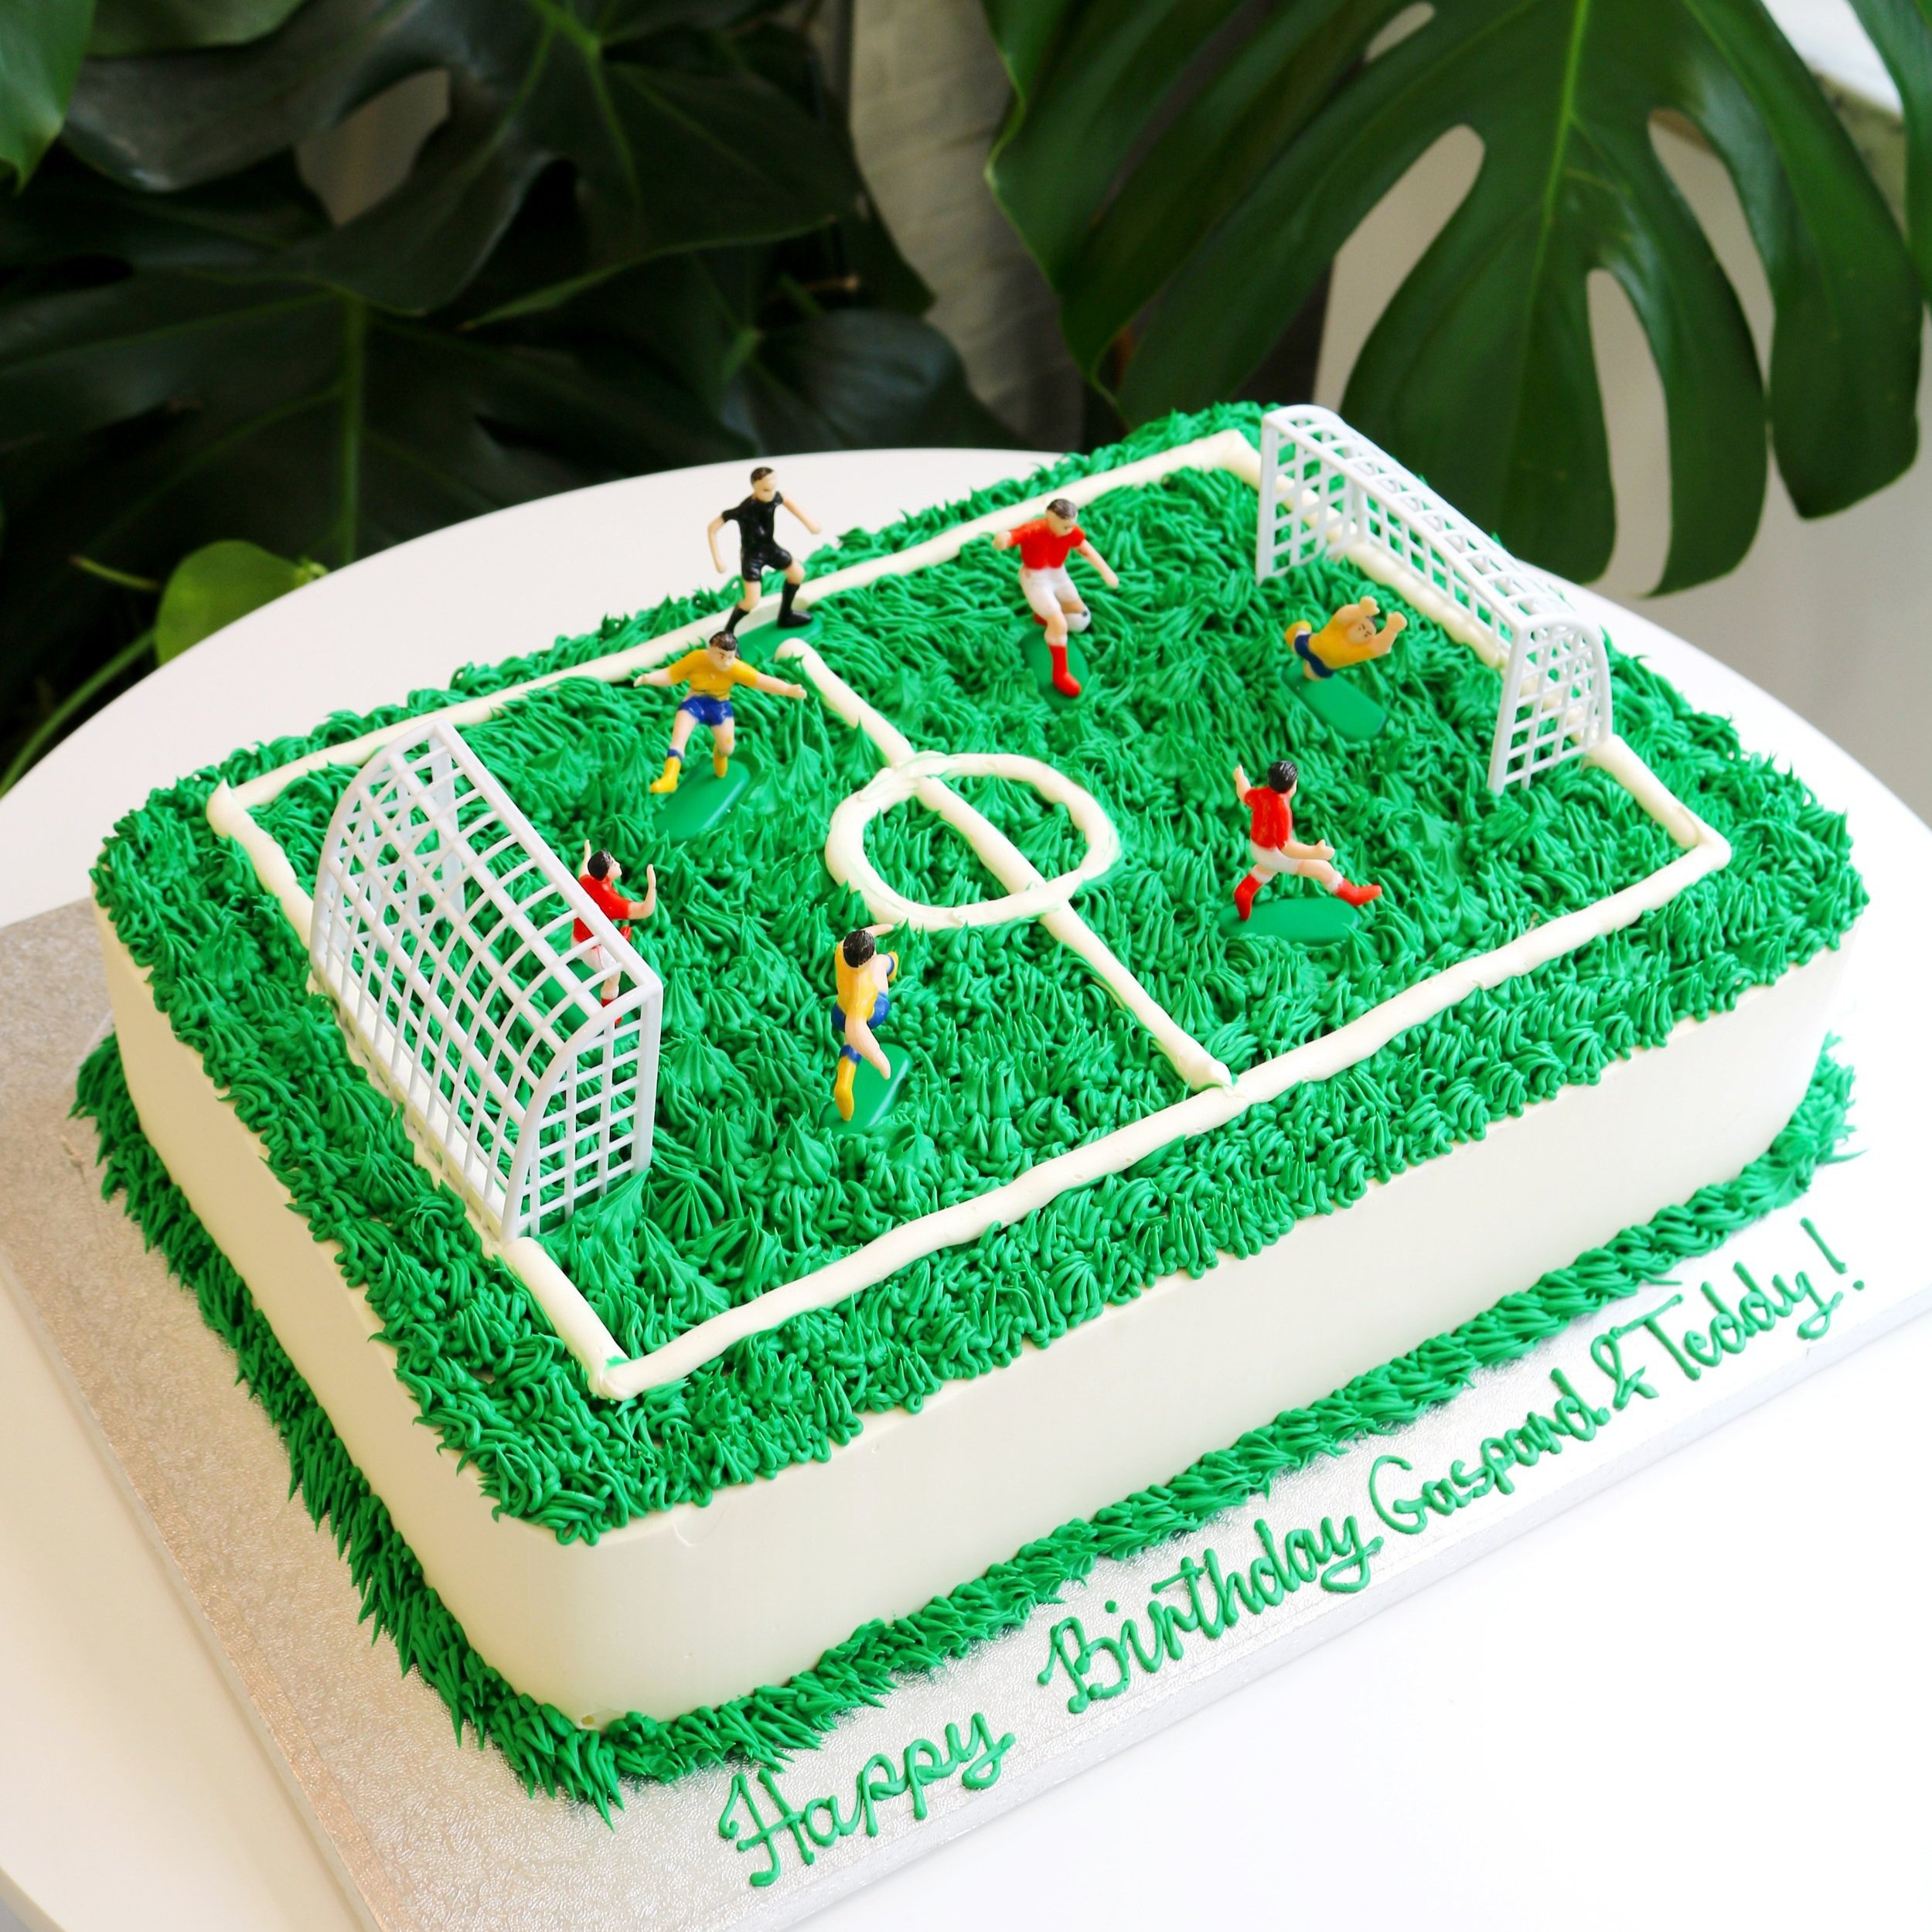 Buy/Send Football Design Cake Online @ Rs. 2414 - SendBestGift